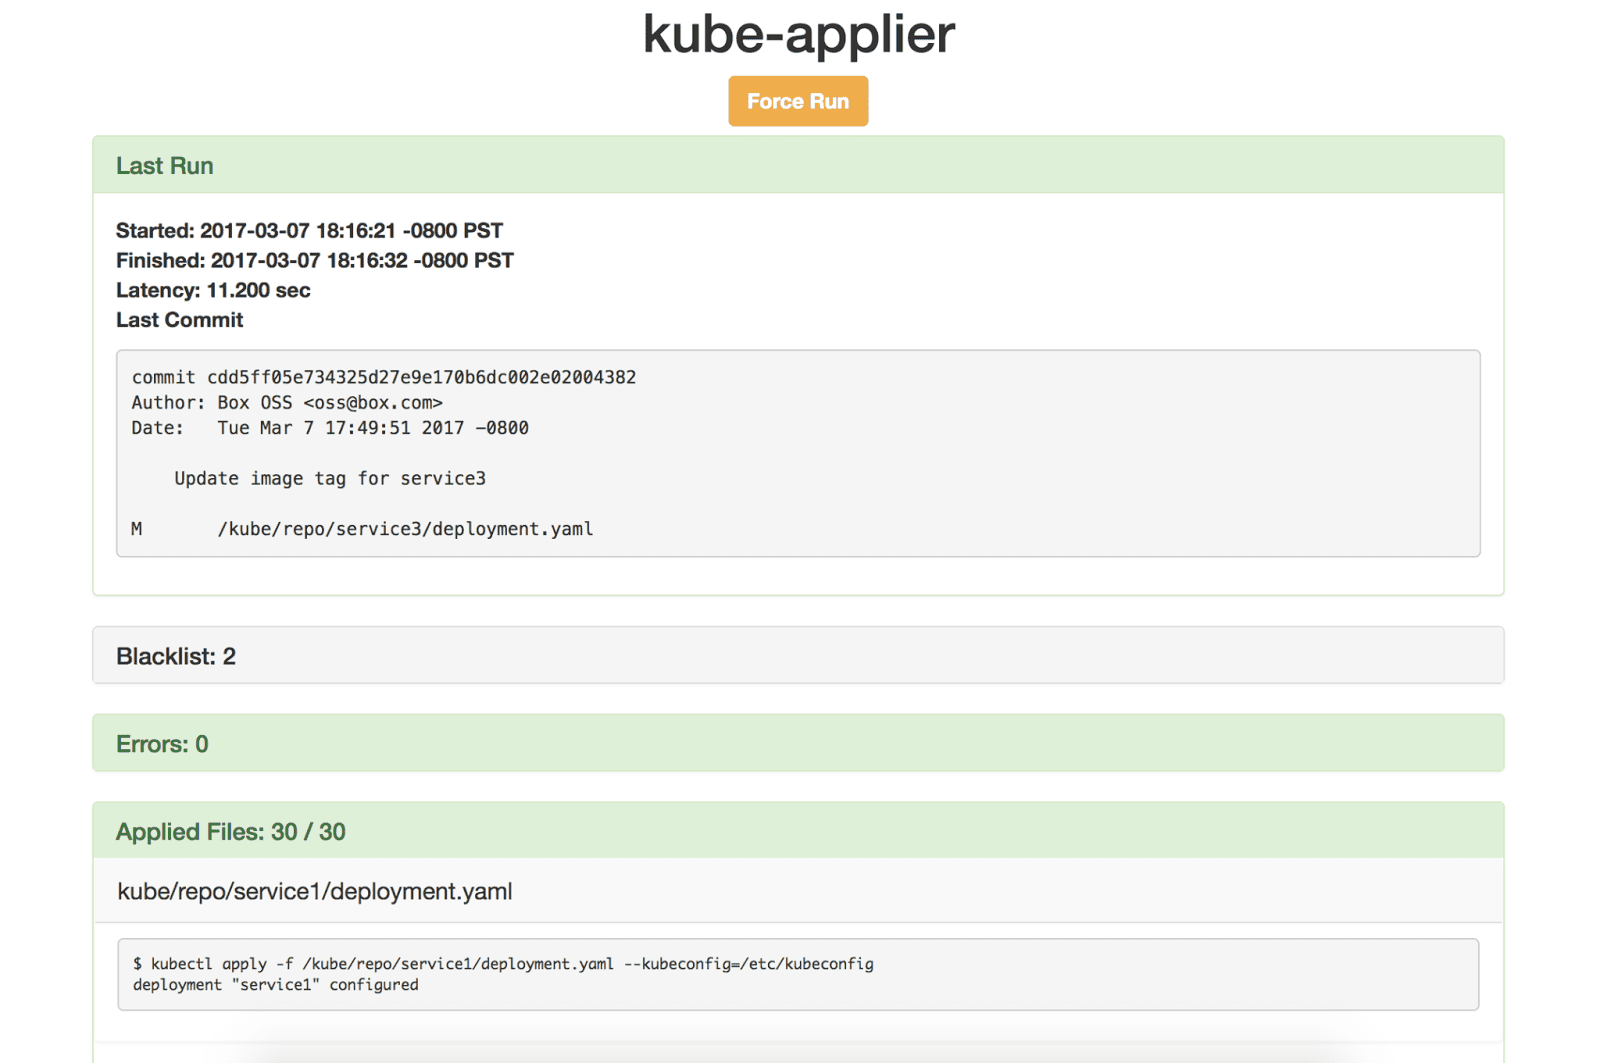 Kube-applier